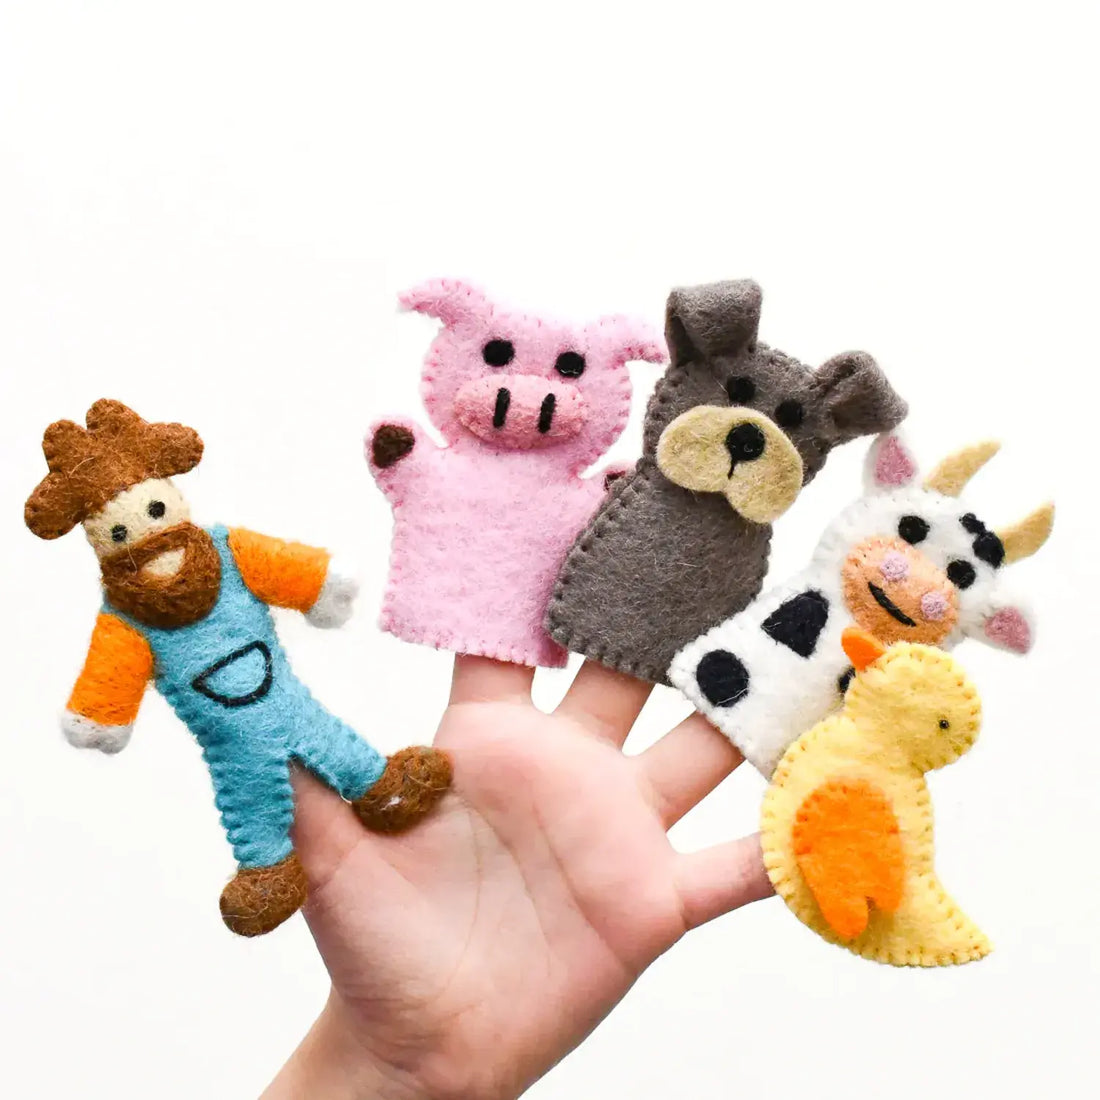 Old MacDonald Farm Animals Finger Puppet Set by Tara Treasures